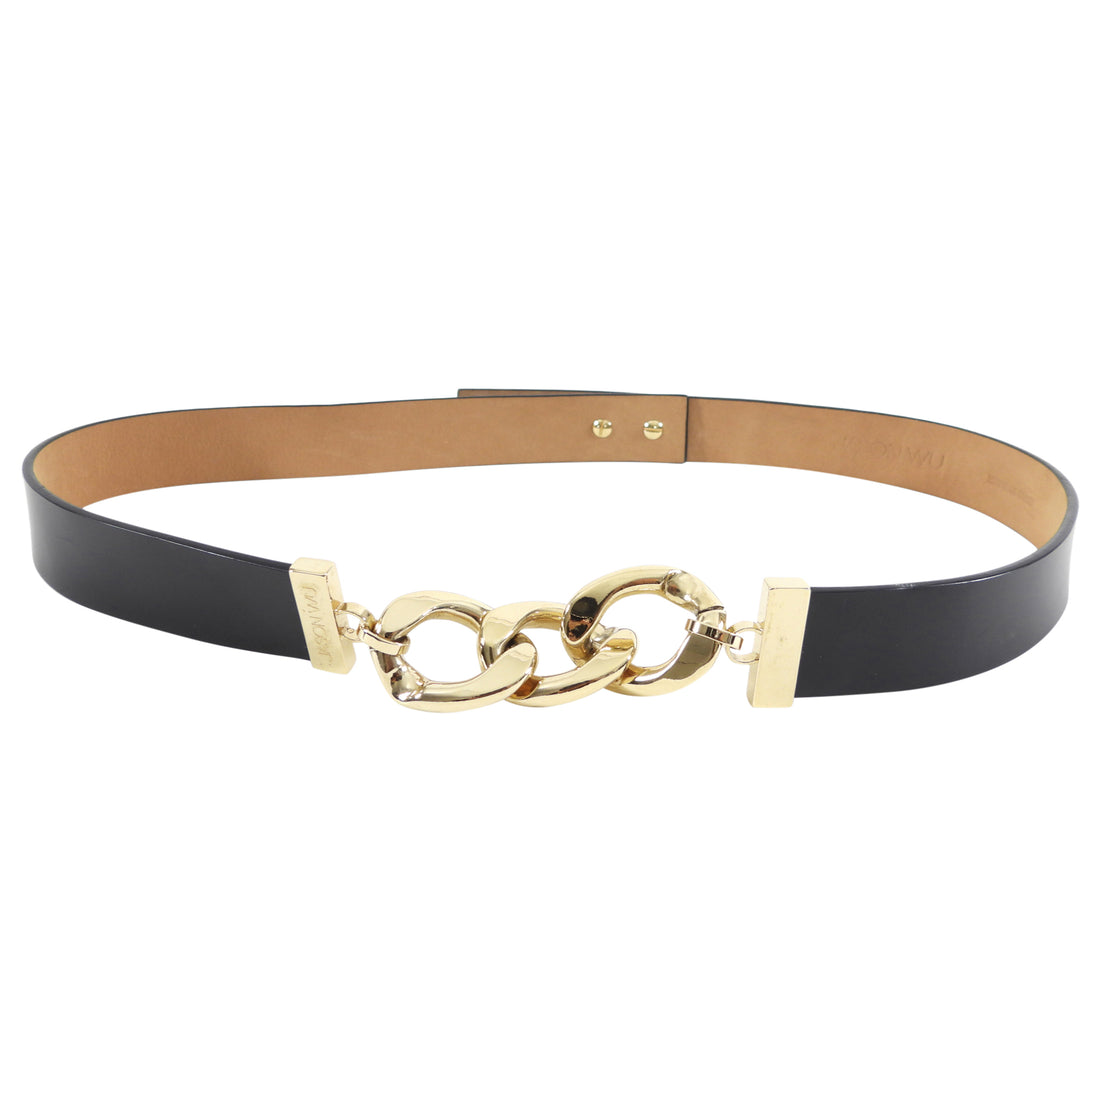 Jason Wu Black Leather and Gold Chain Belt - 32-35” (L)